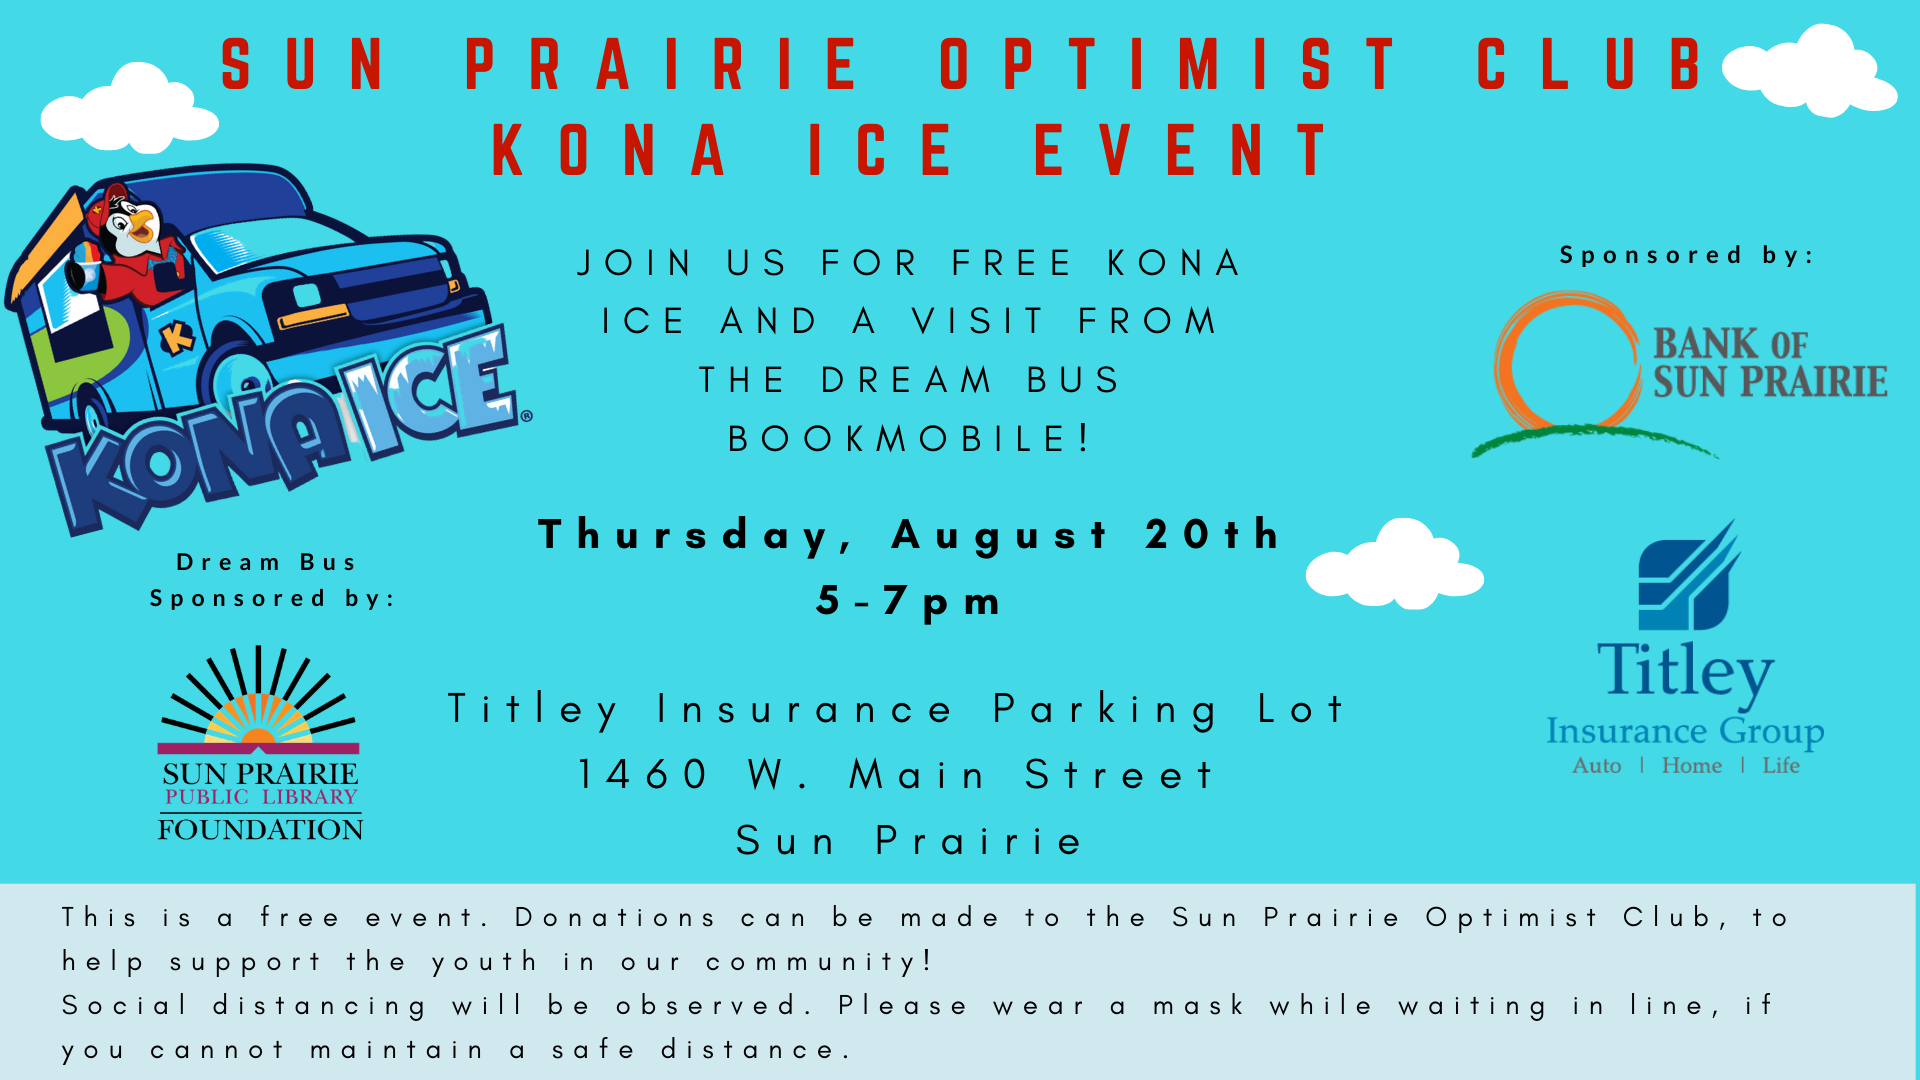 Optimist Club Kona Ice Fundraiser with Dream Bus bookmobile